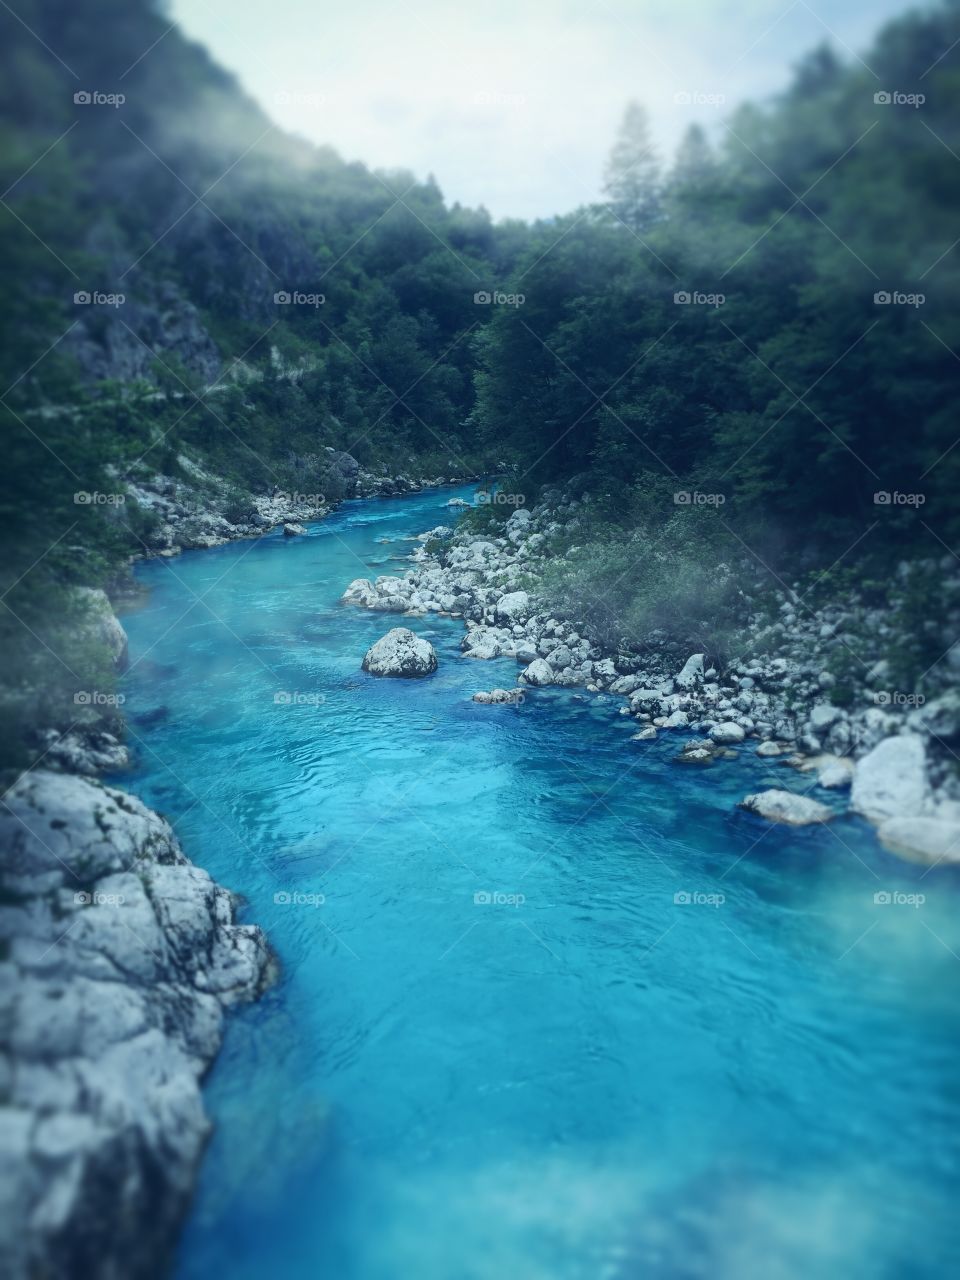 Slovenian River